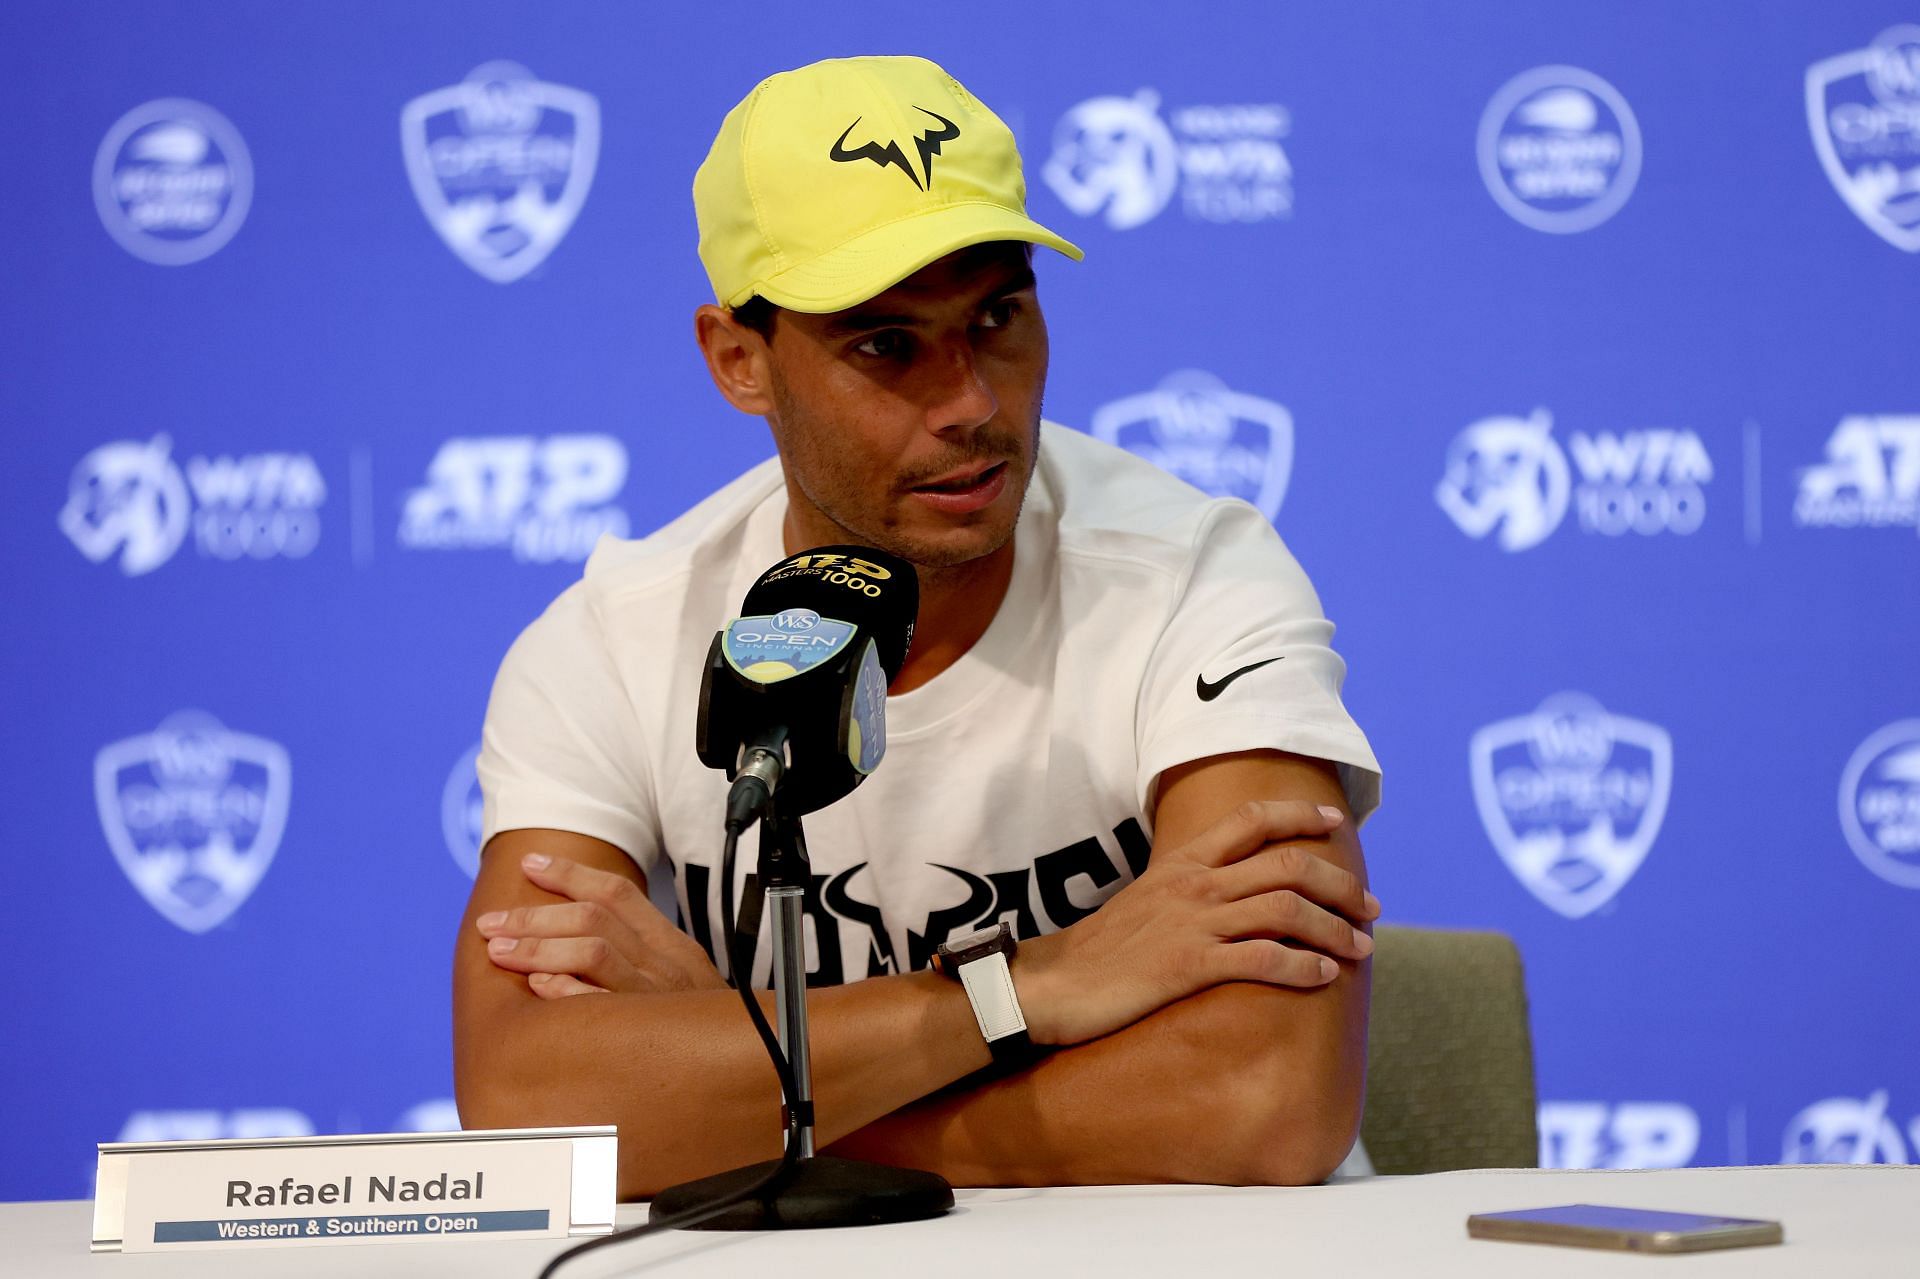 Rafael Nadal is likely to take on Borna Coric in his opener at Cincinnati